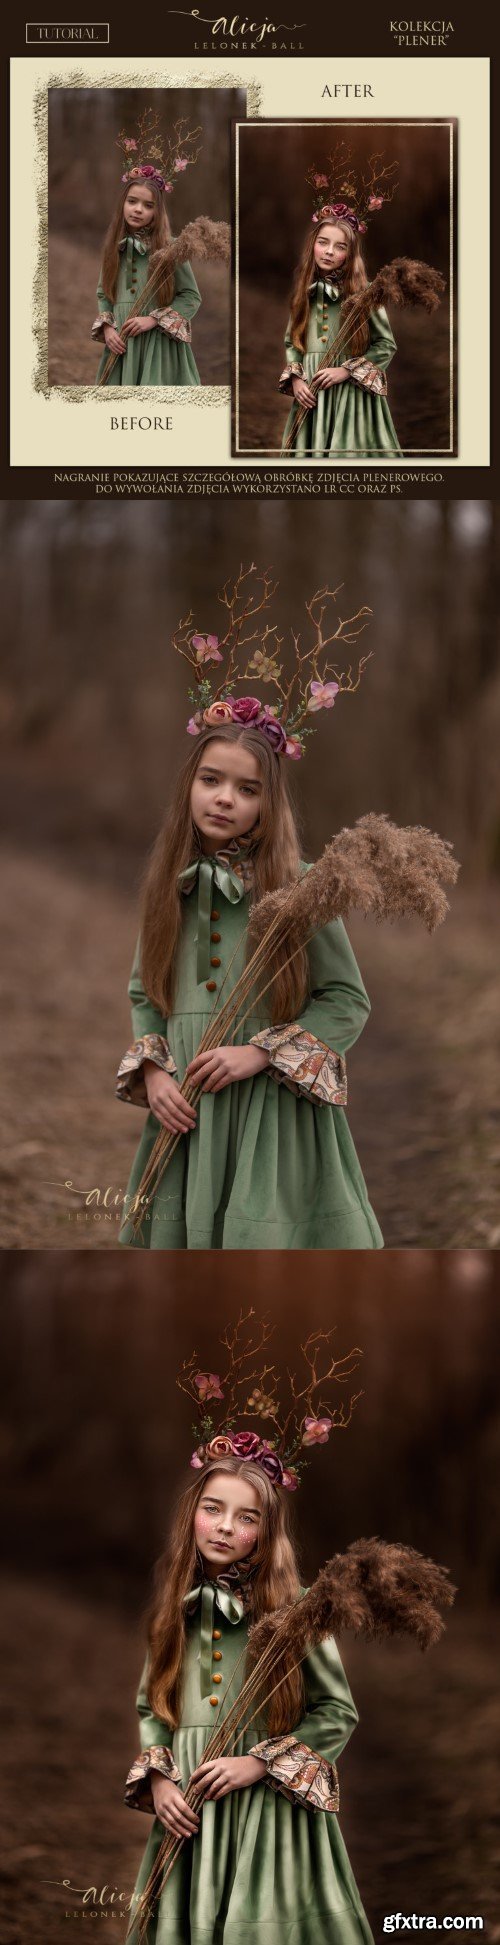 Alicja Jelonek - Outdoor Portrait